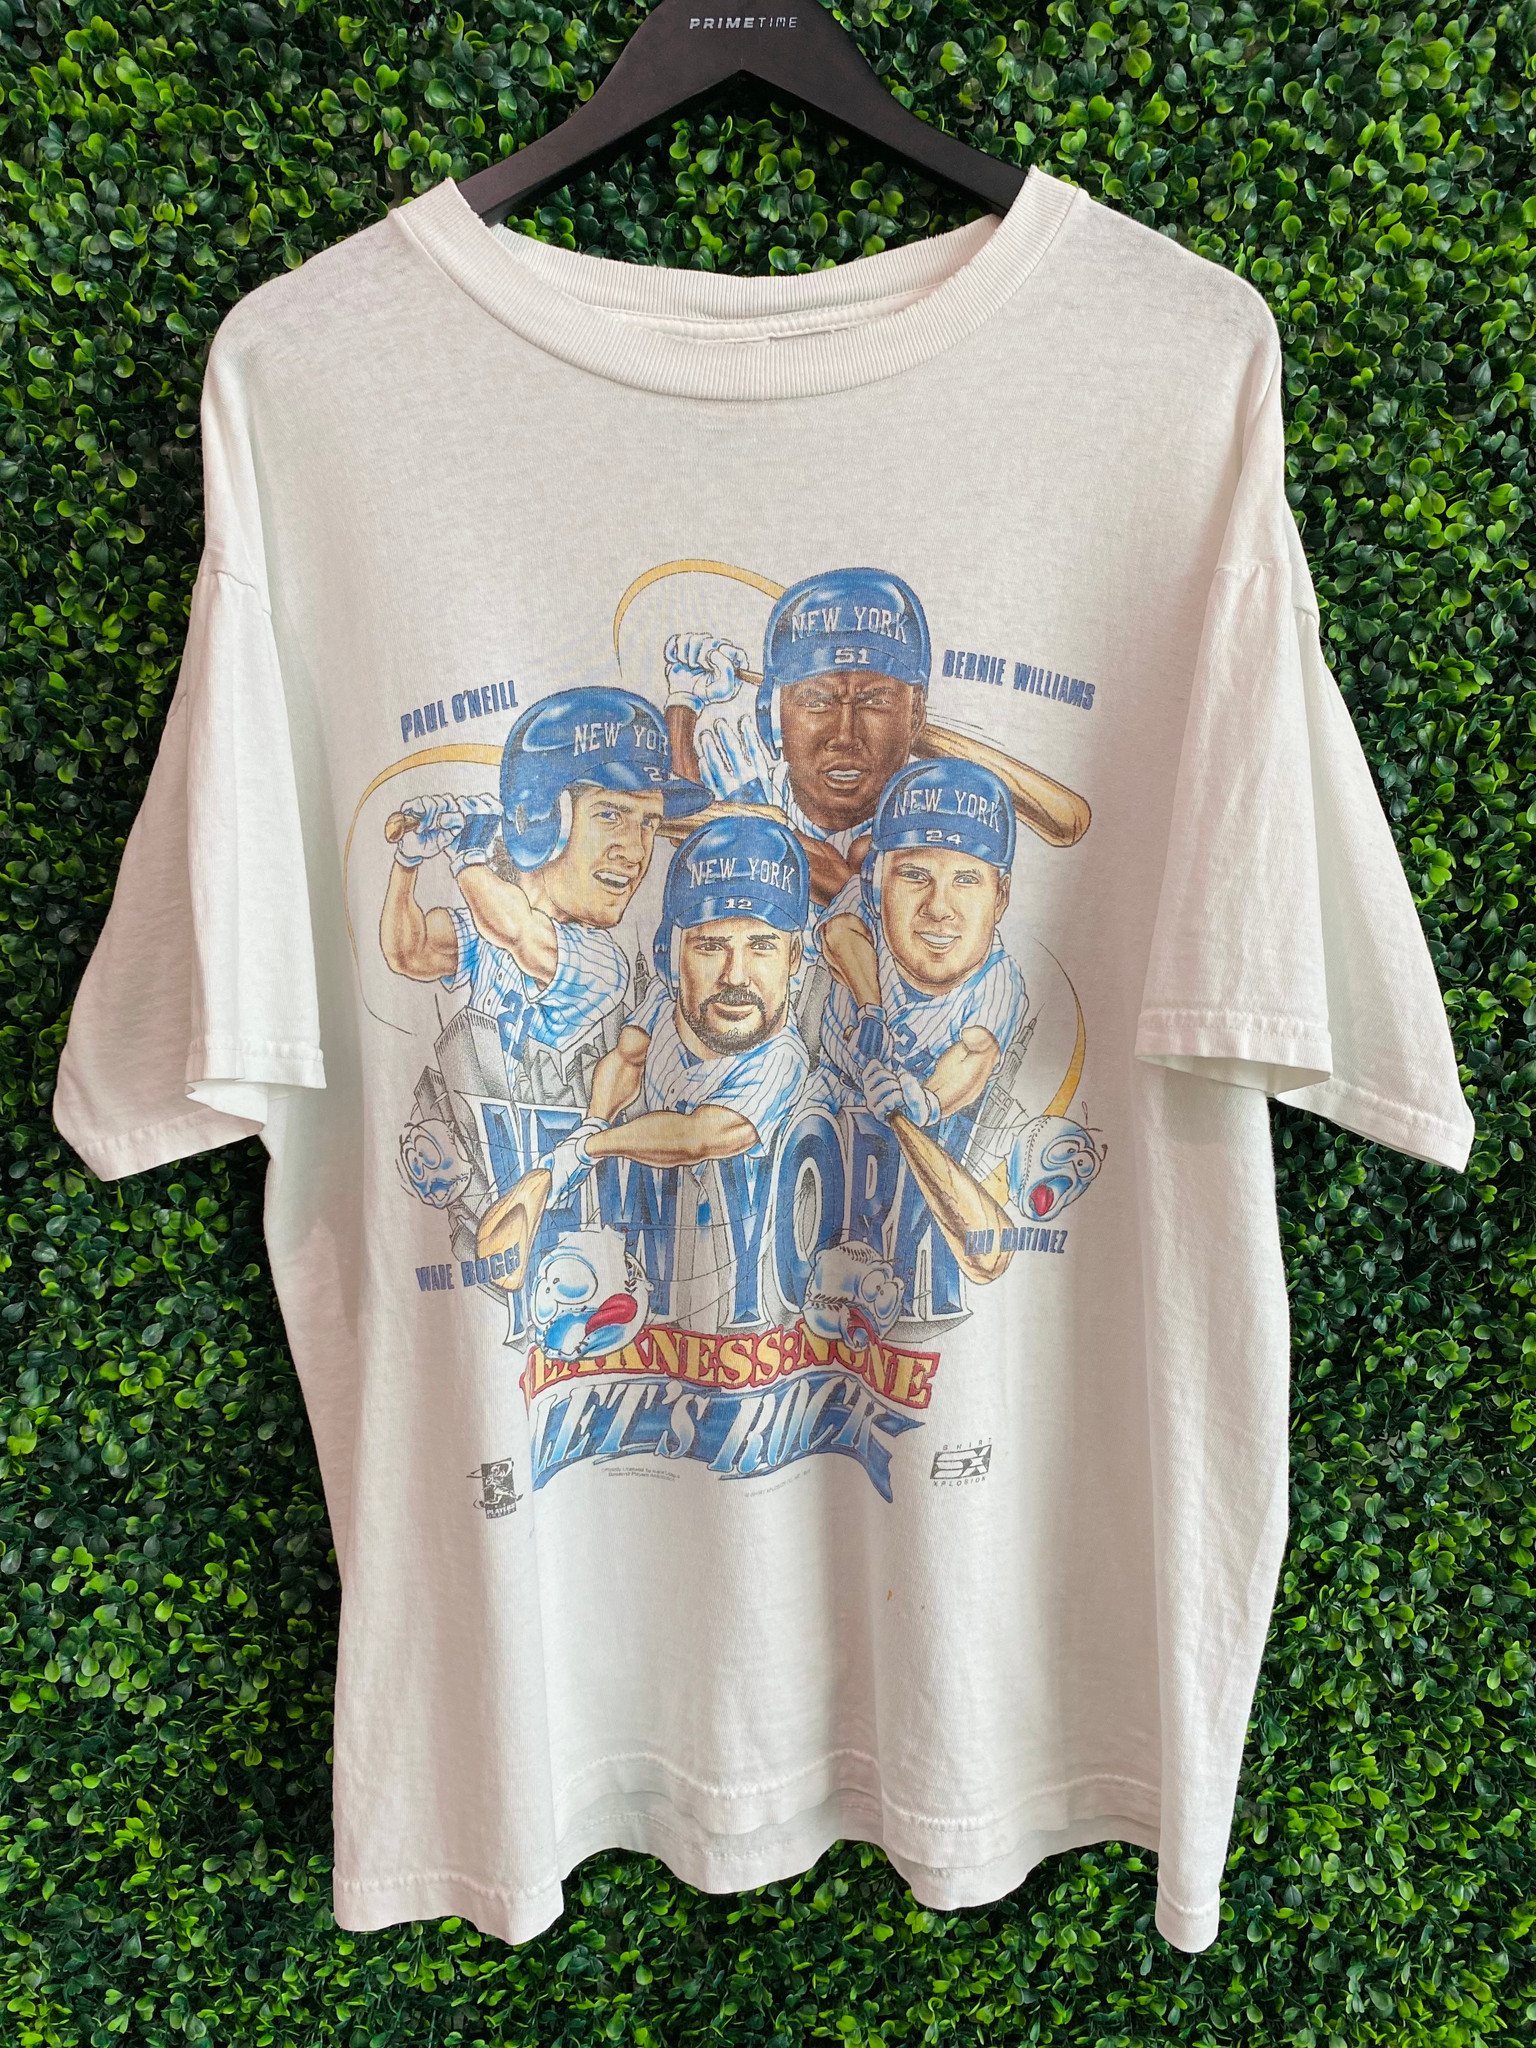 Dandy Mascot New York Yankees t-shirt by To-Tee Clothing - Issuu